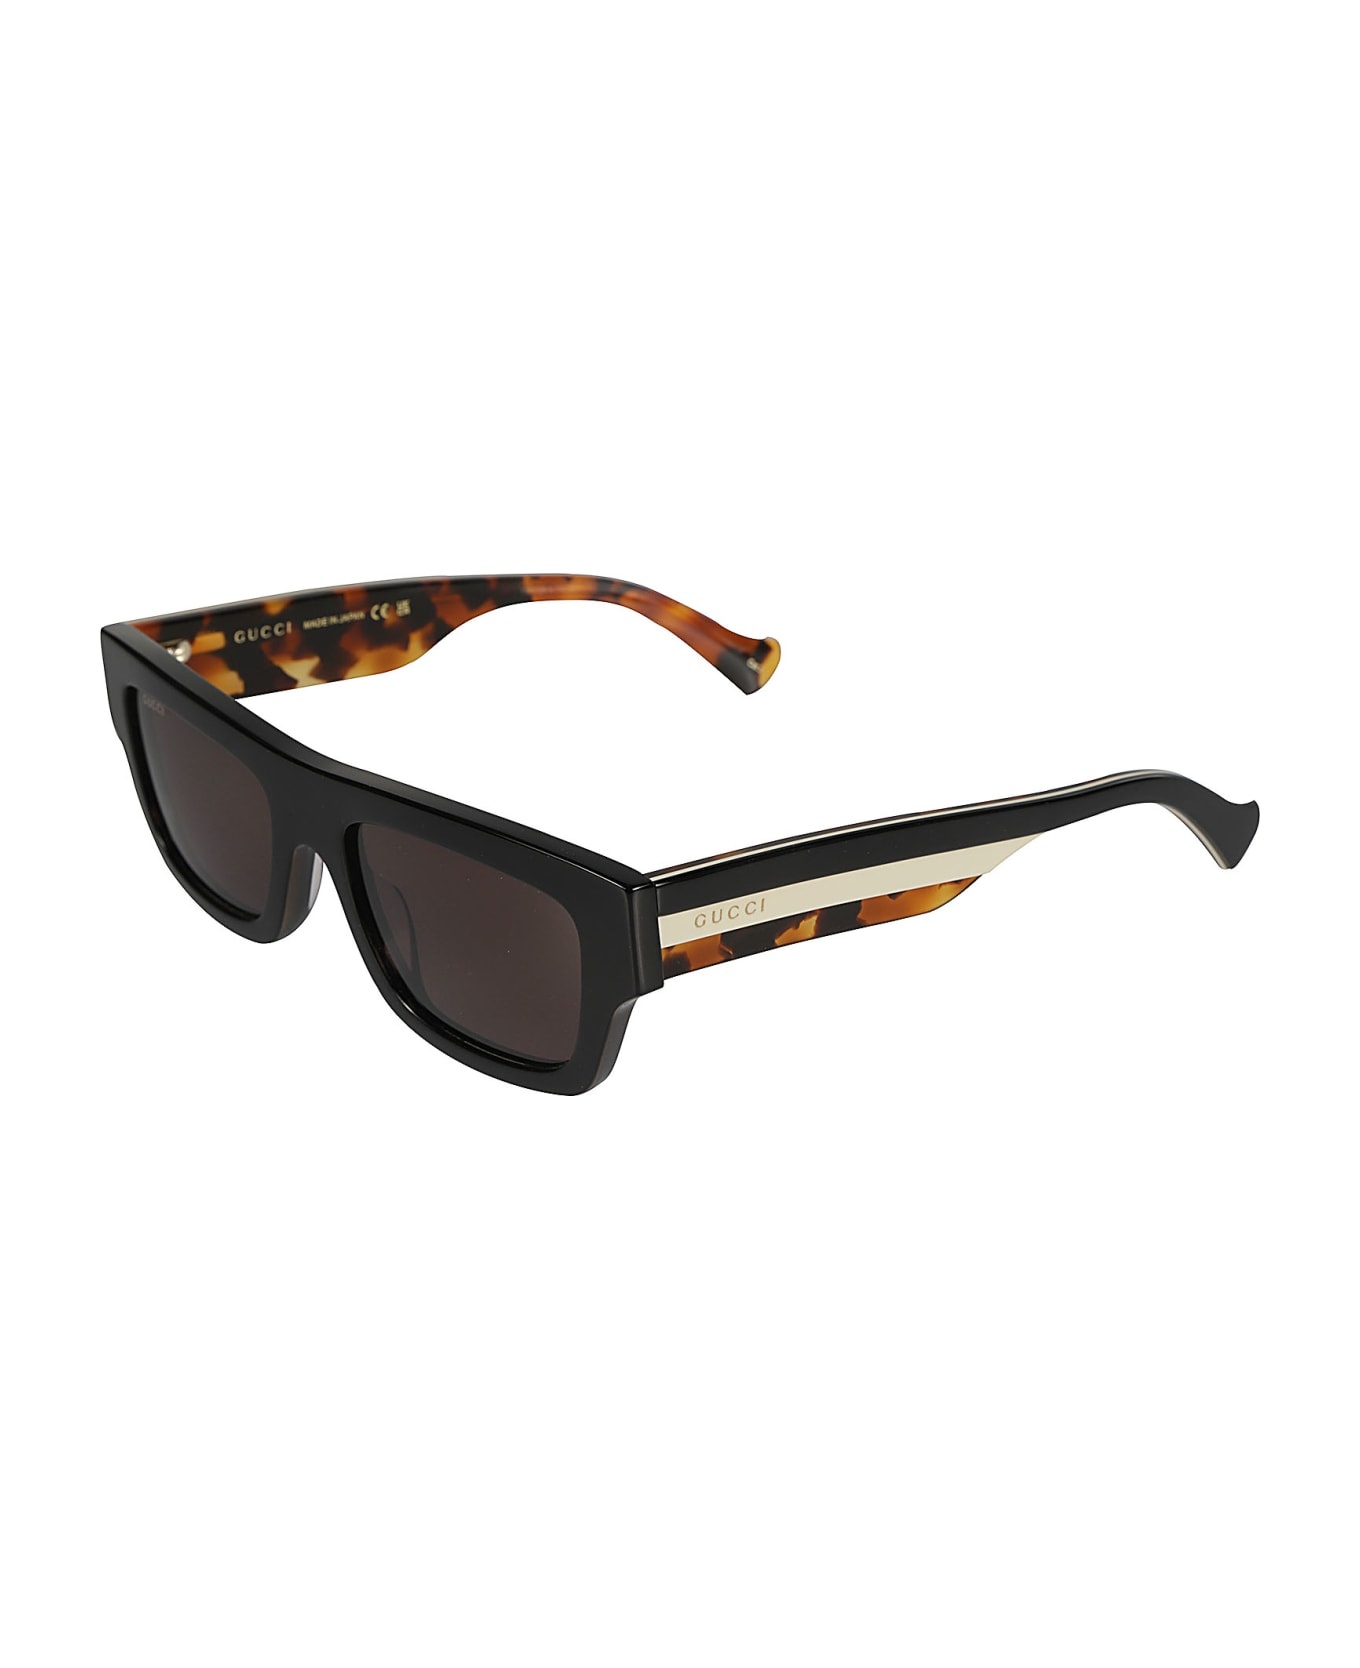 Flame Effect Classic Sunglasses - 2